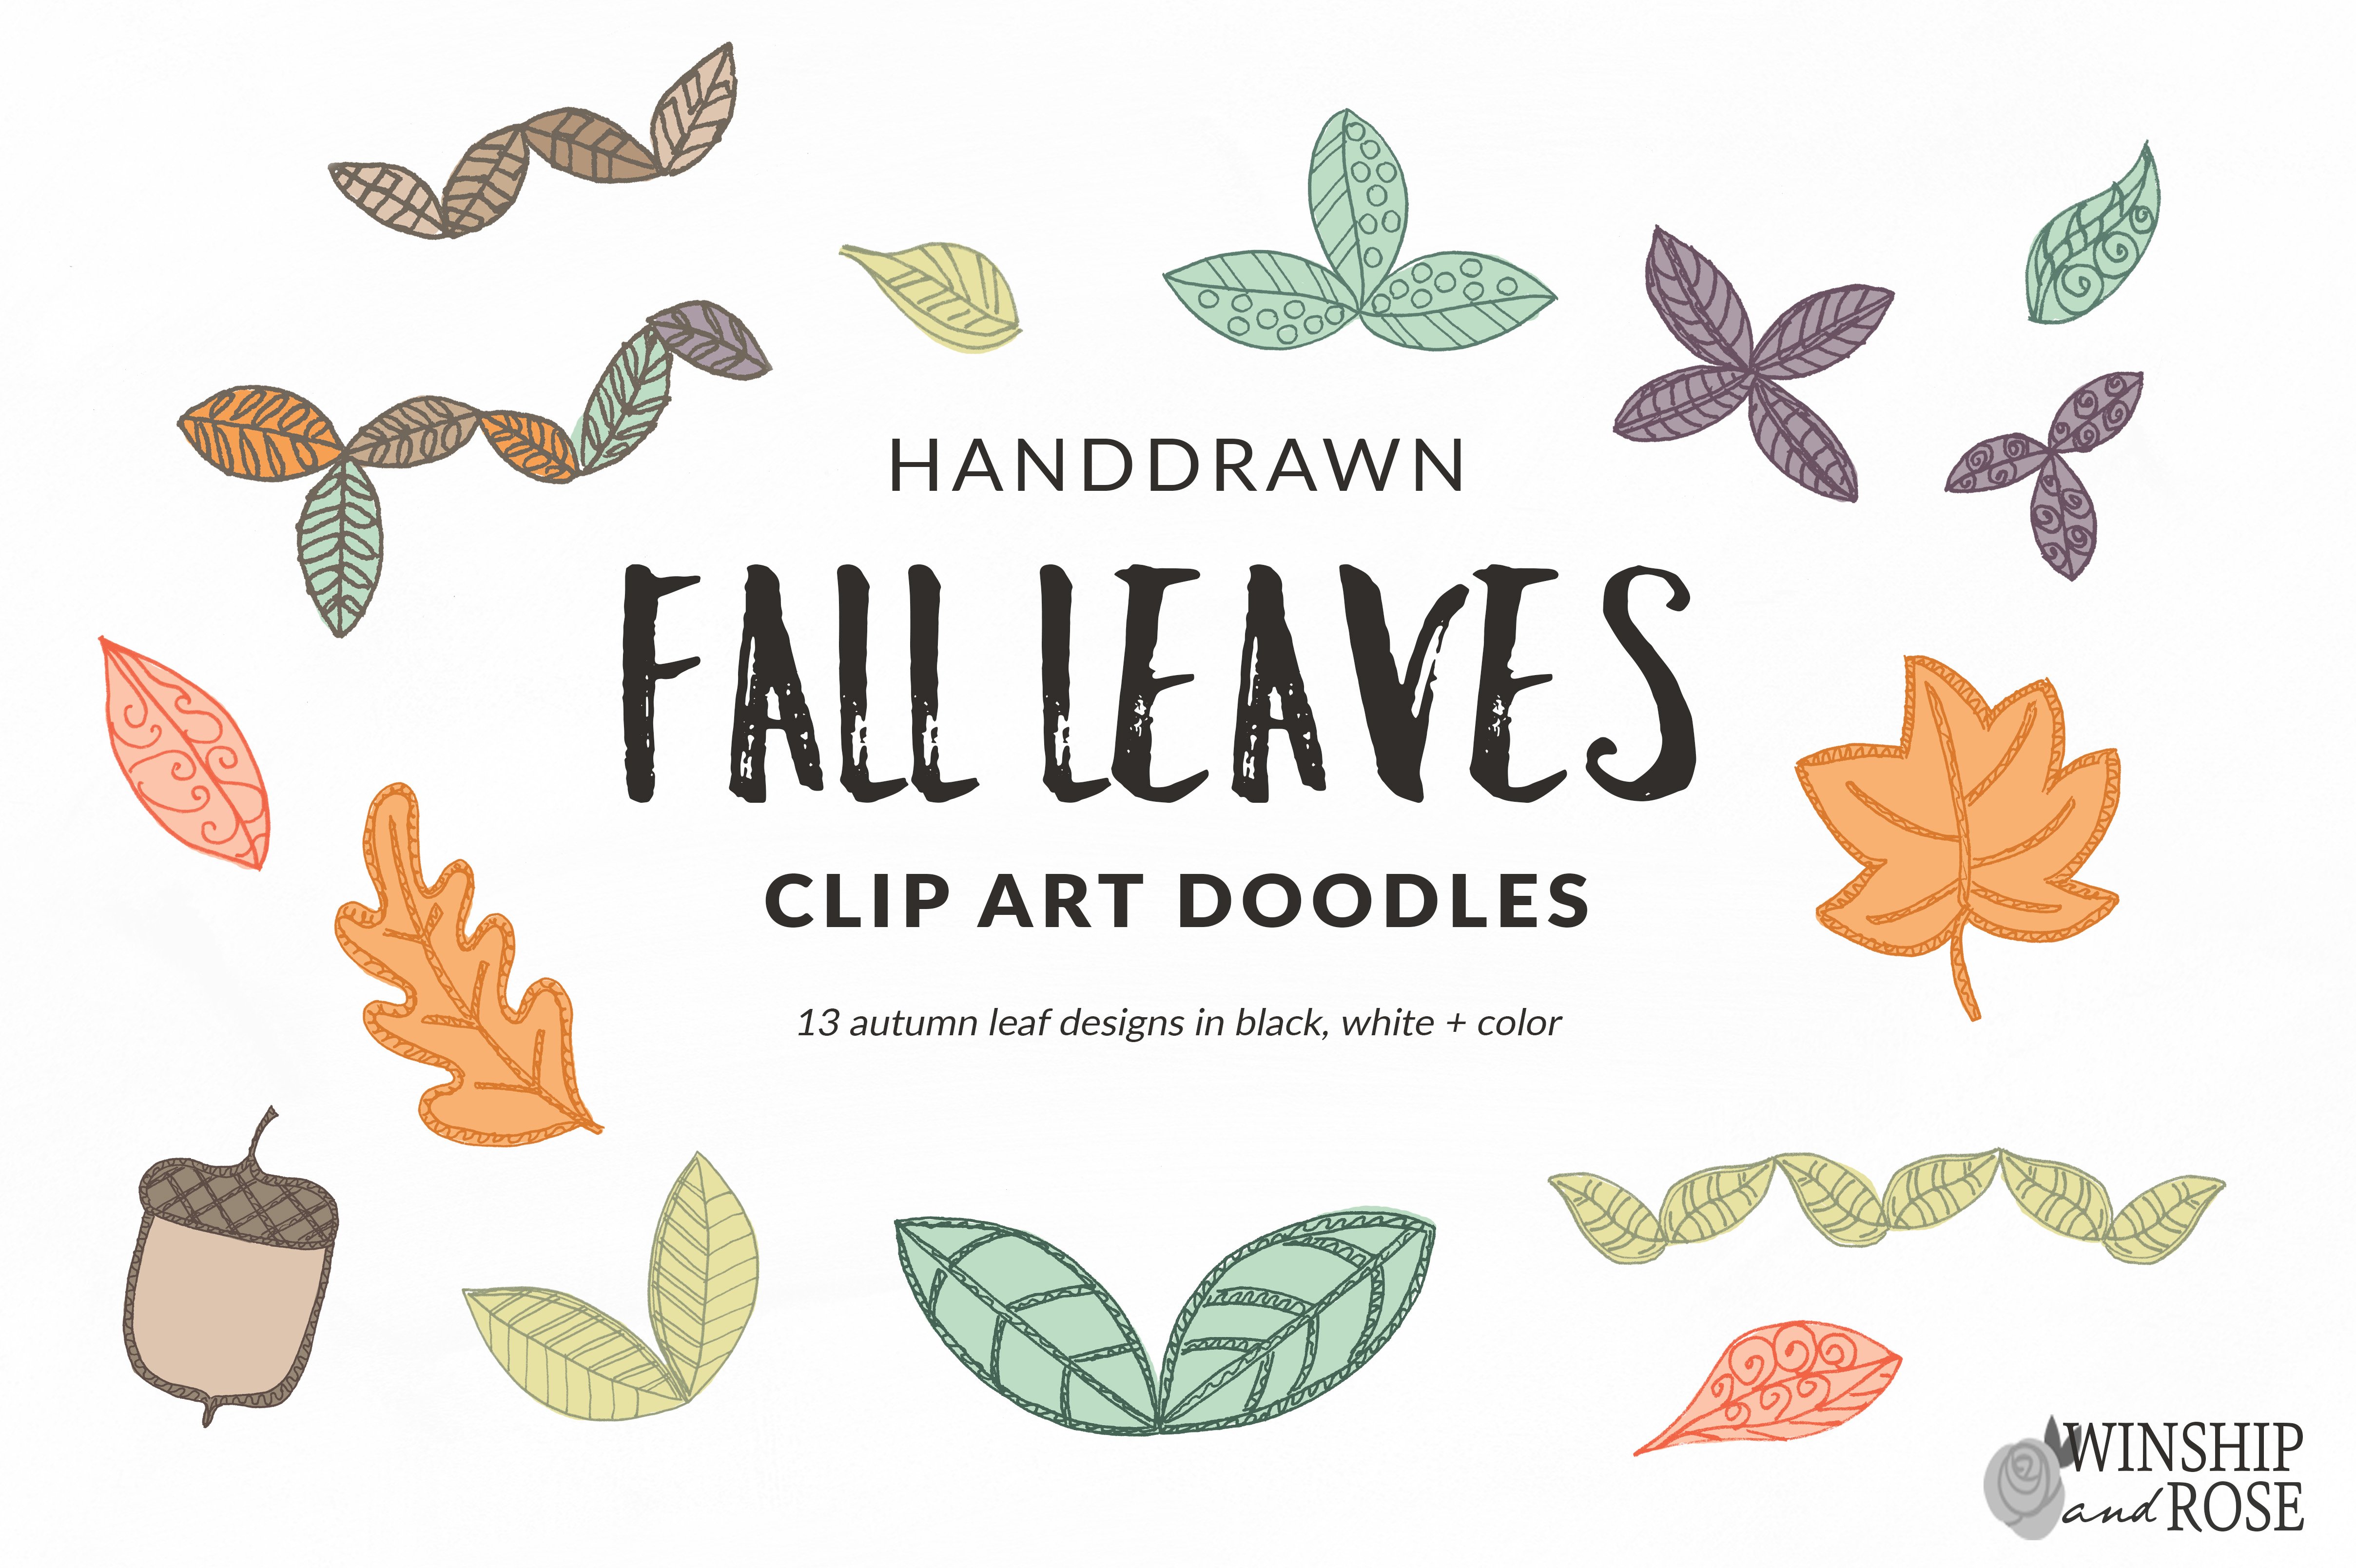 Fall Leaves - Leaf Clip Art Doodles cover image.